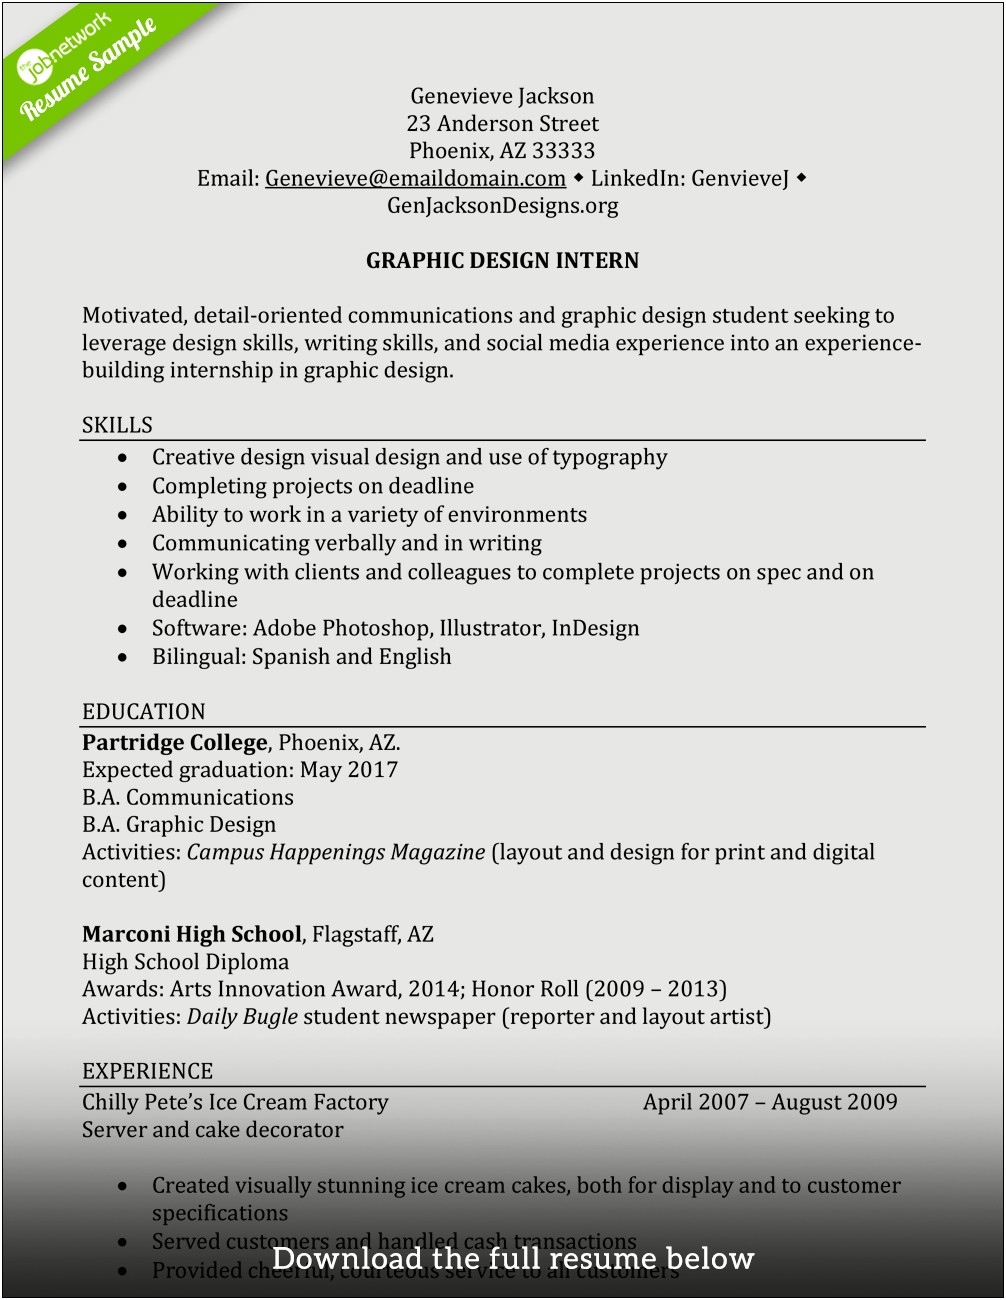 Accounting Internship Objective Resume Sample